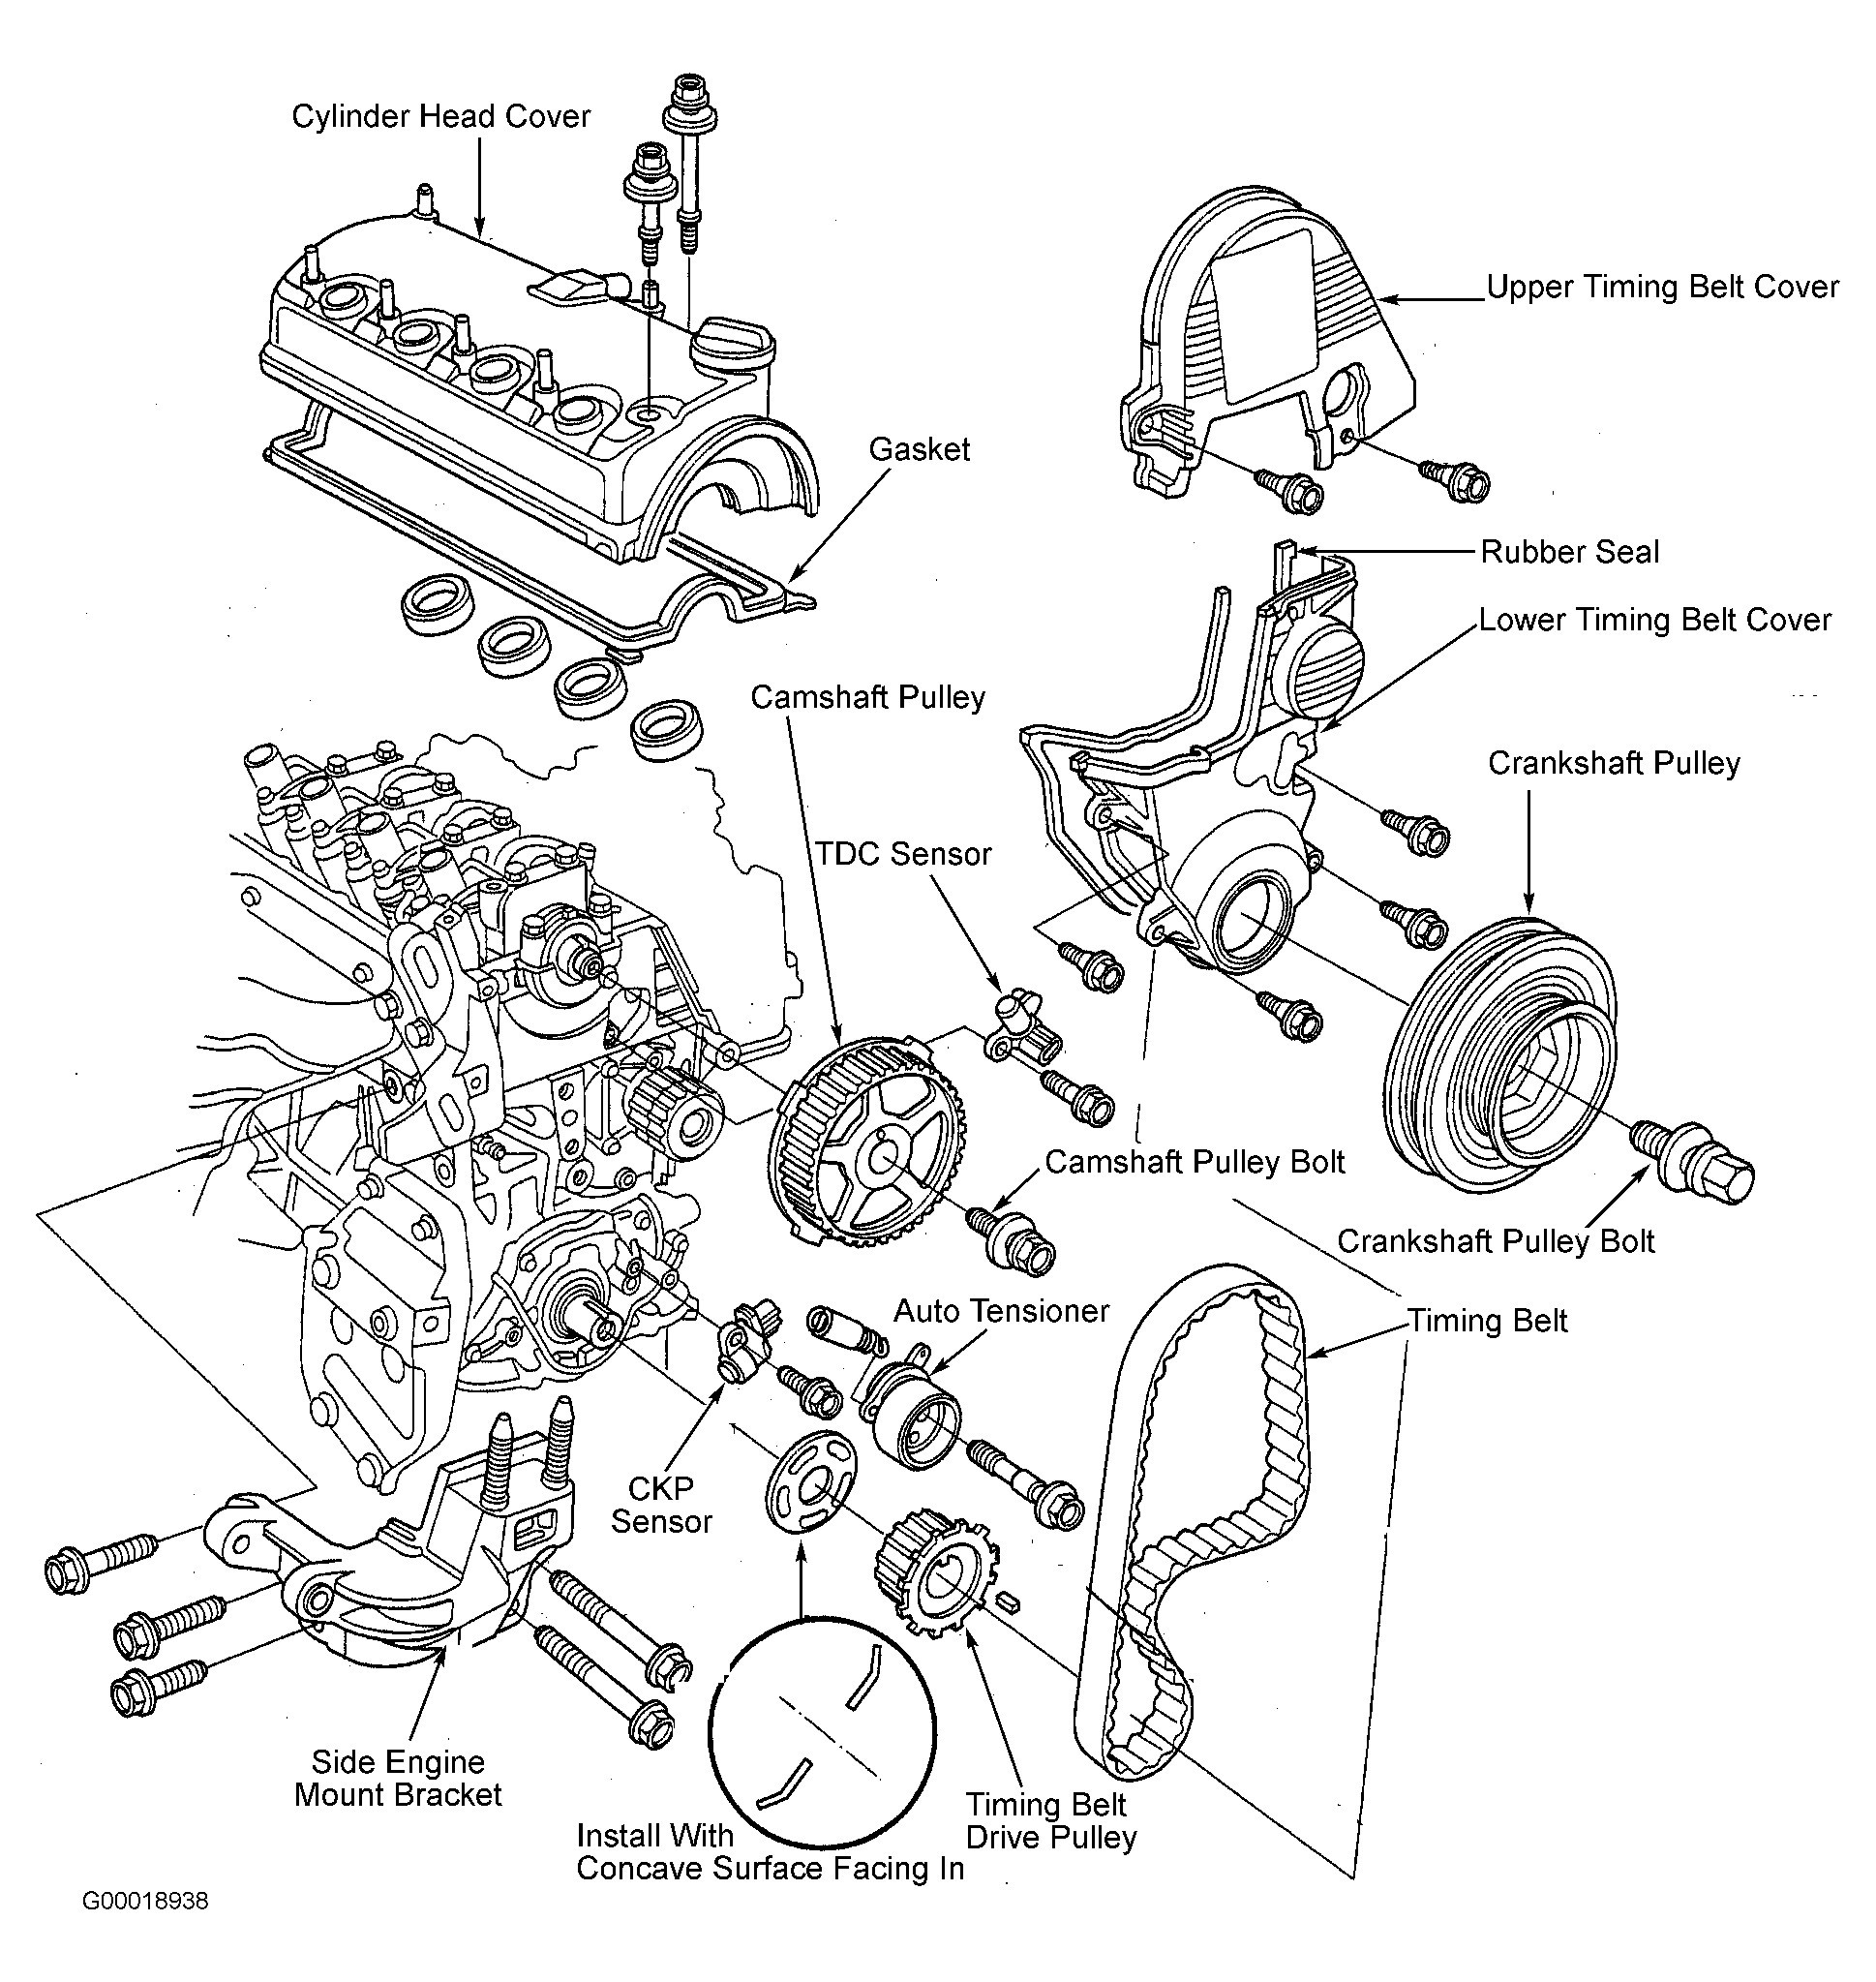 2003 Chevy Trailblazer Engine Diagram 1